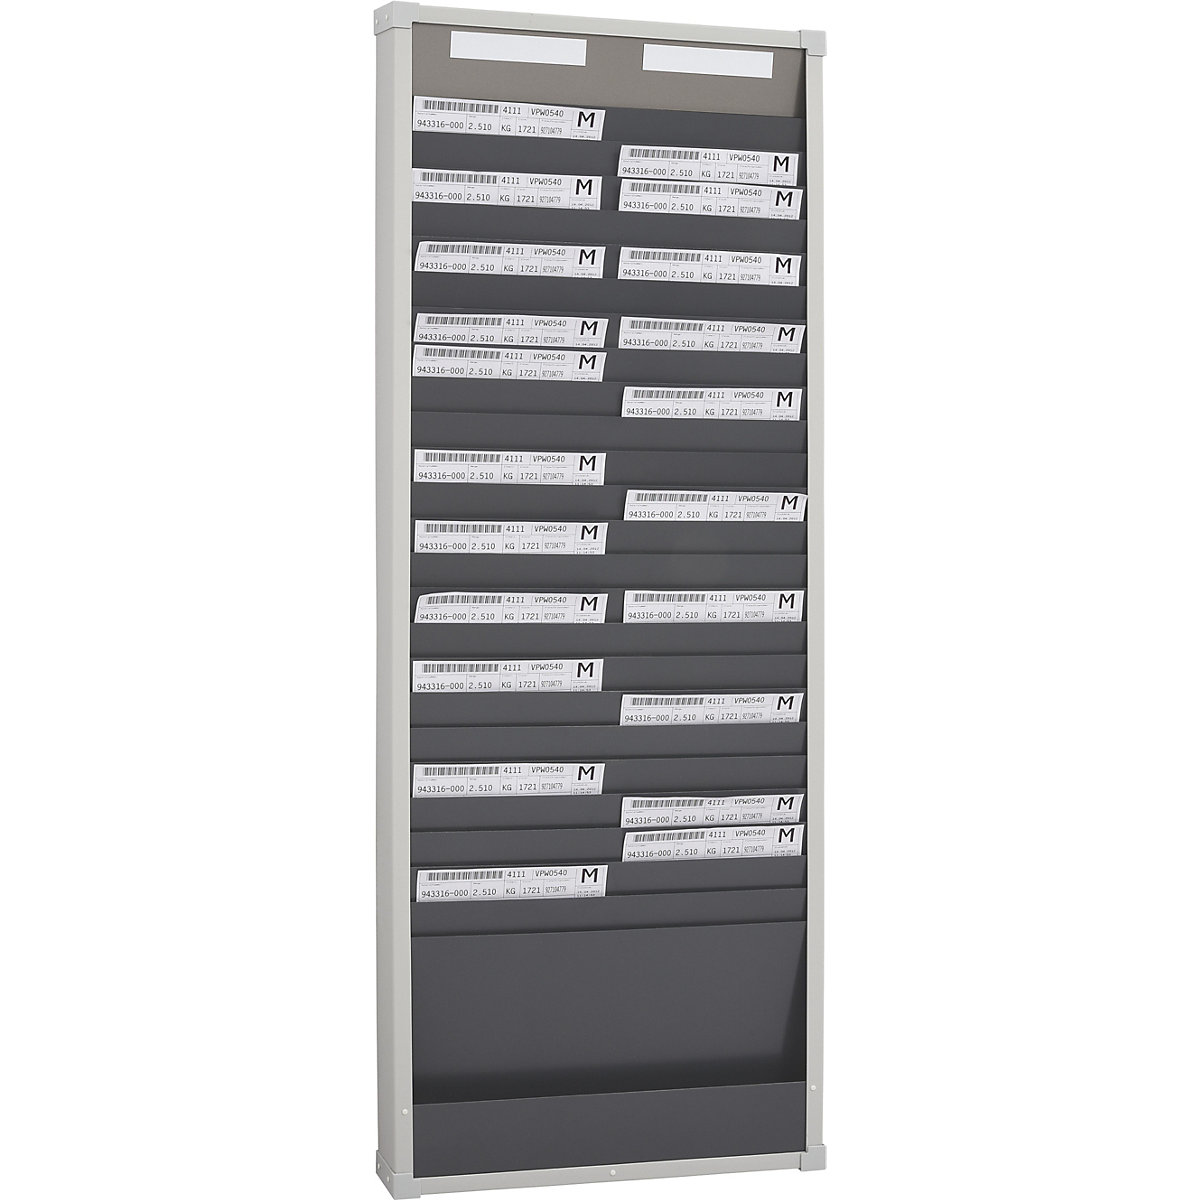 Panel modular clasificador para documentos – EICHNER, 25 compartimentos, altura 1350 mm, con 2 hileras-9